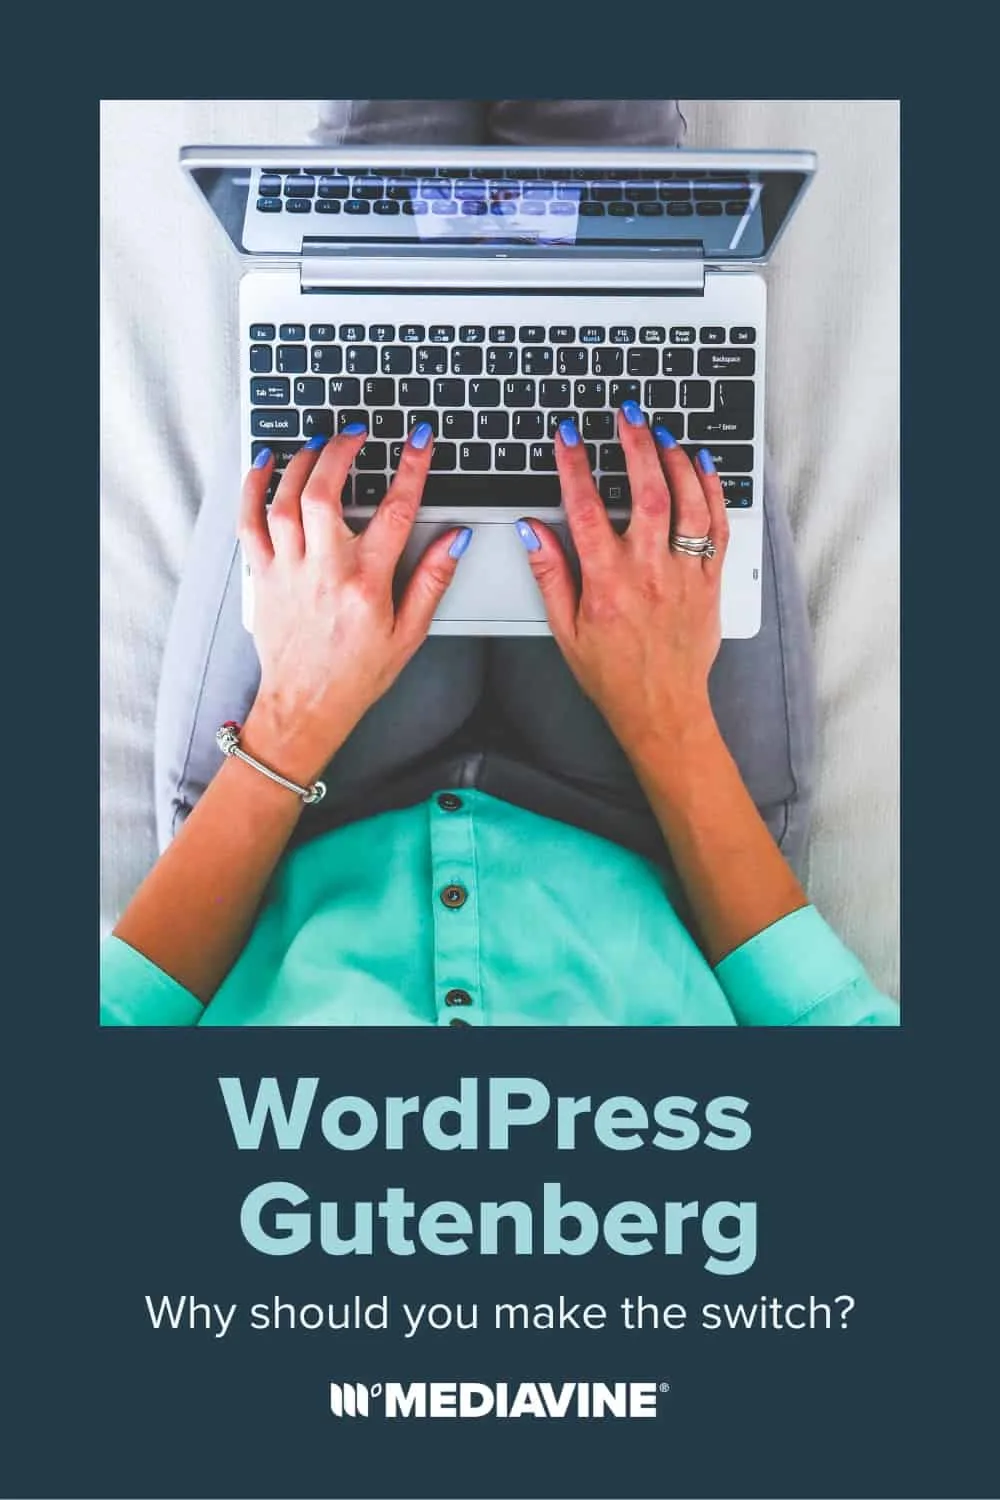 Mediavine Pinterest image - WordPress Gutenberg: Why should you make the switch?